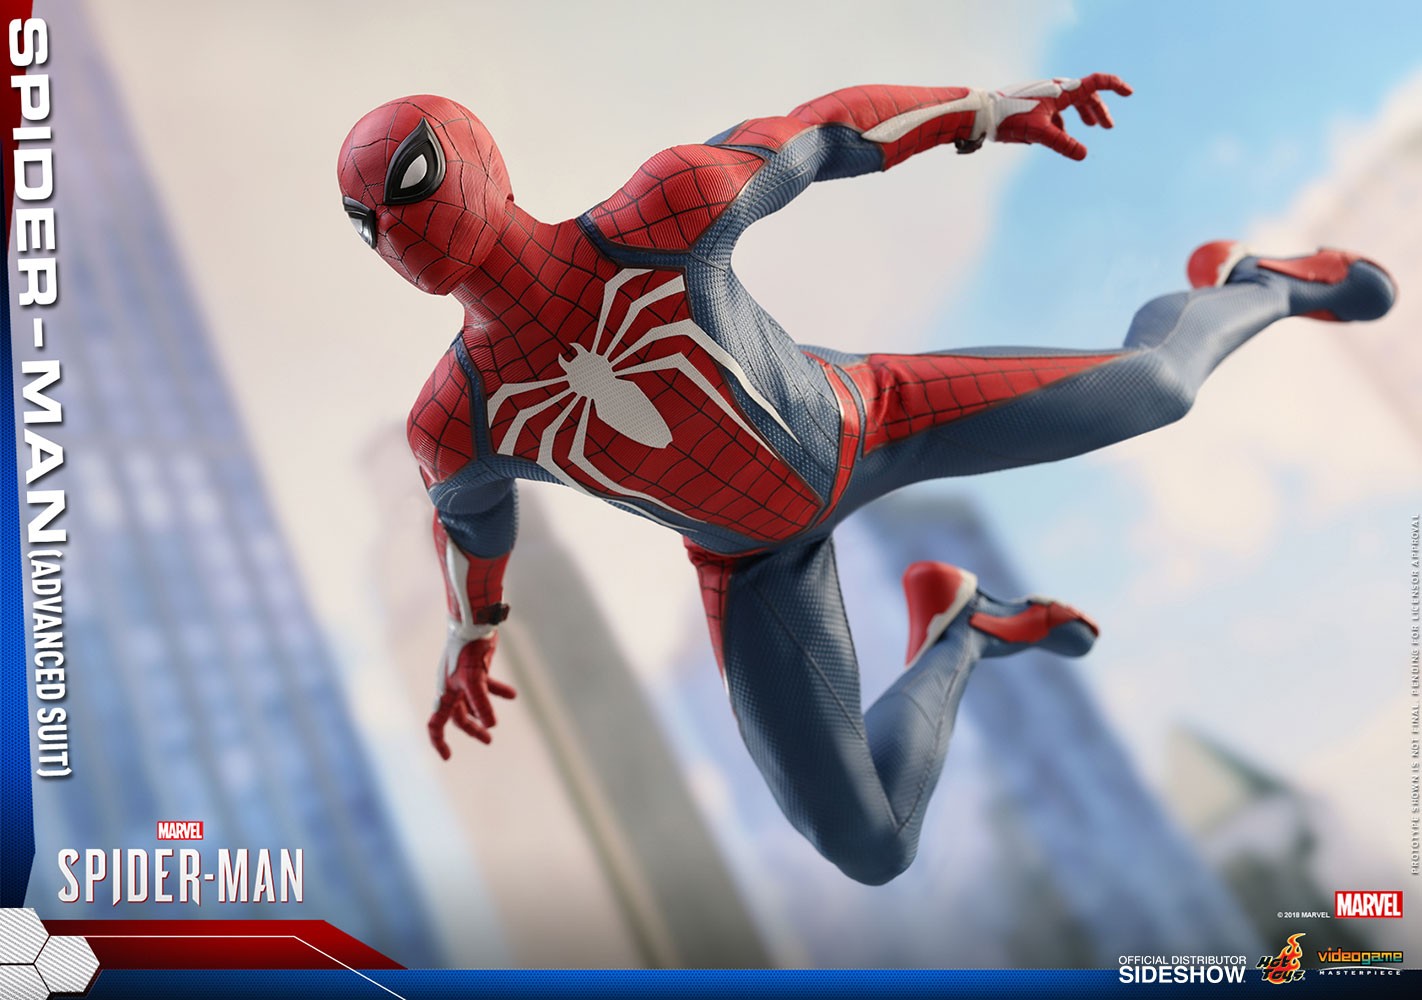 Spider-Man Advanced Suit (Prototype Shown) View 7